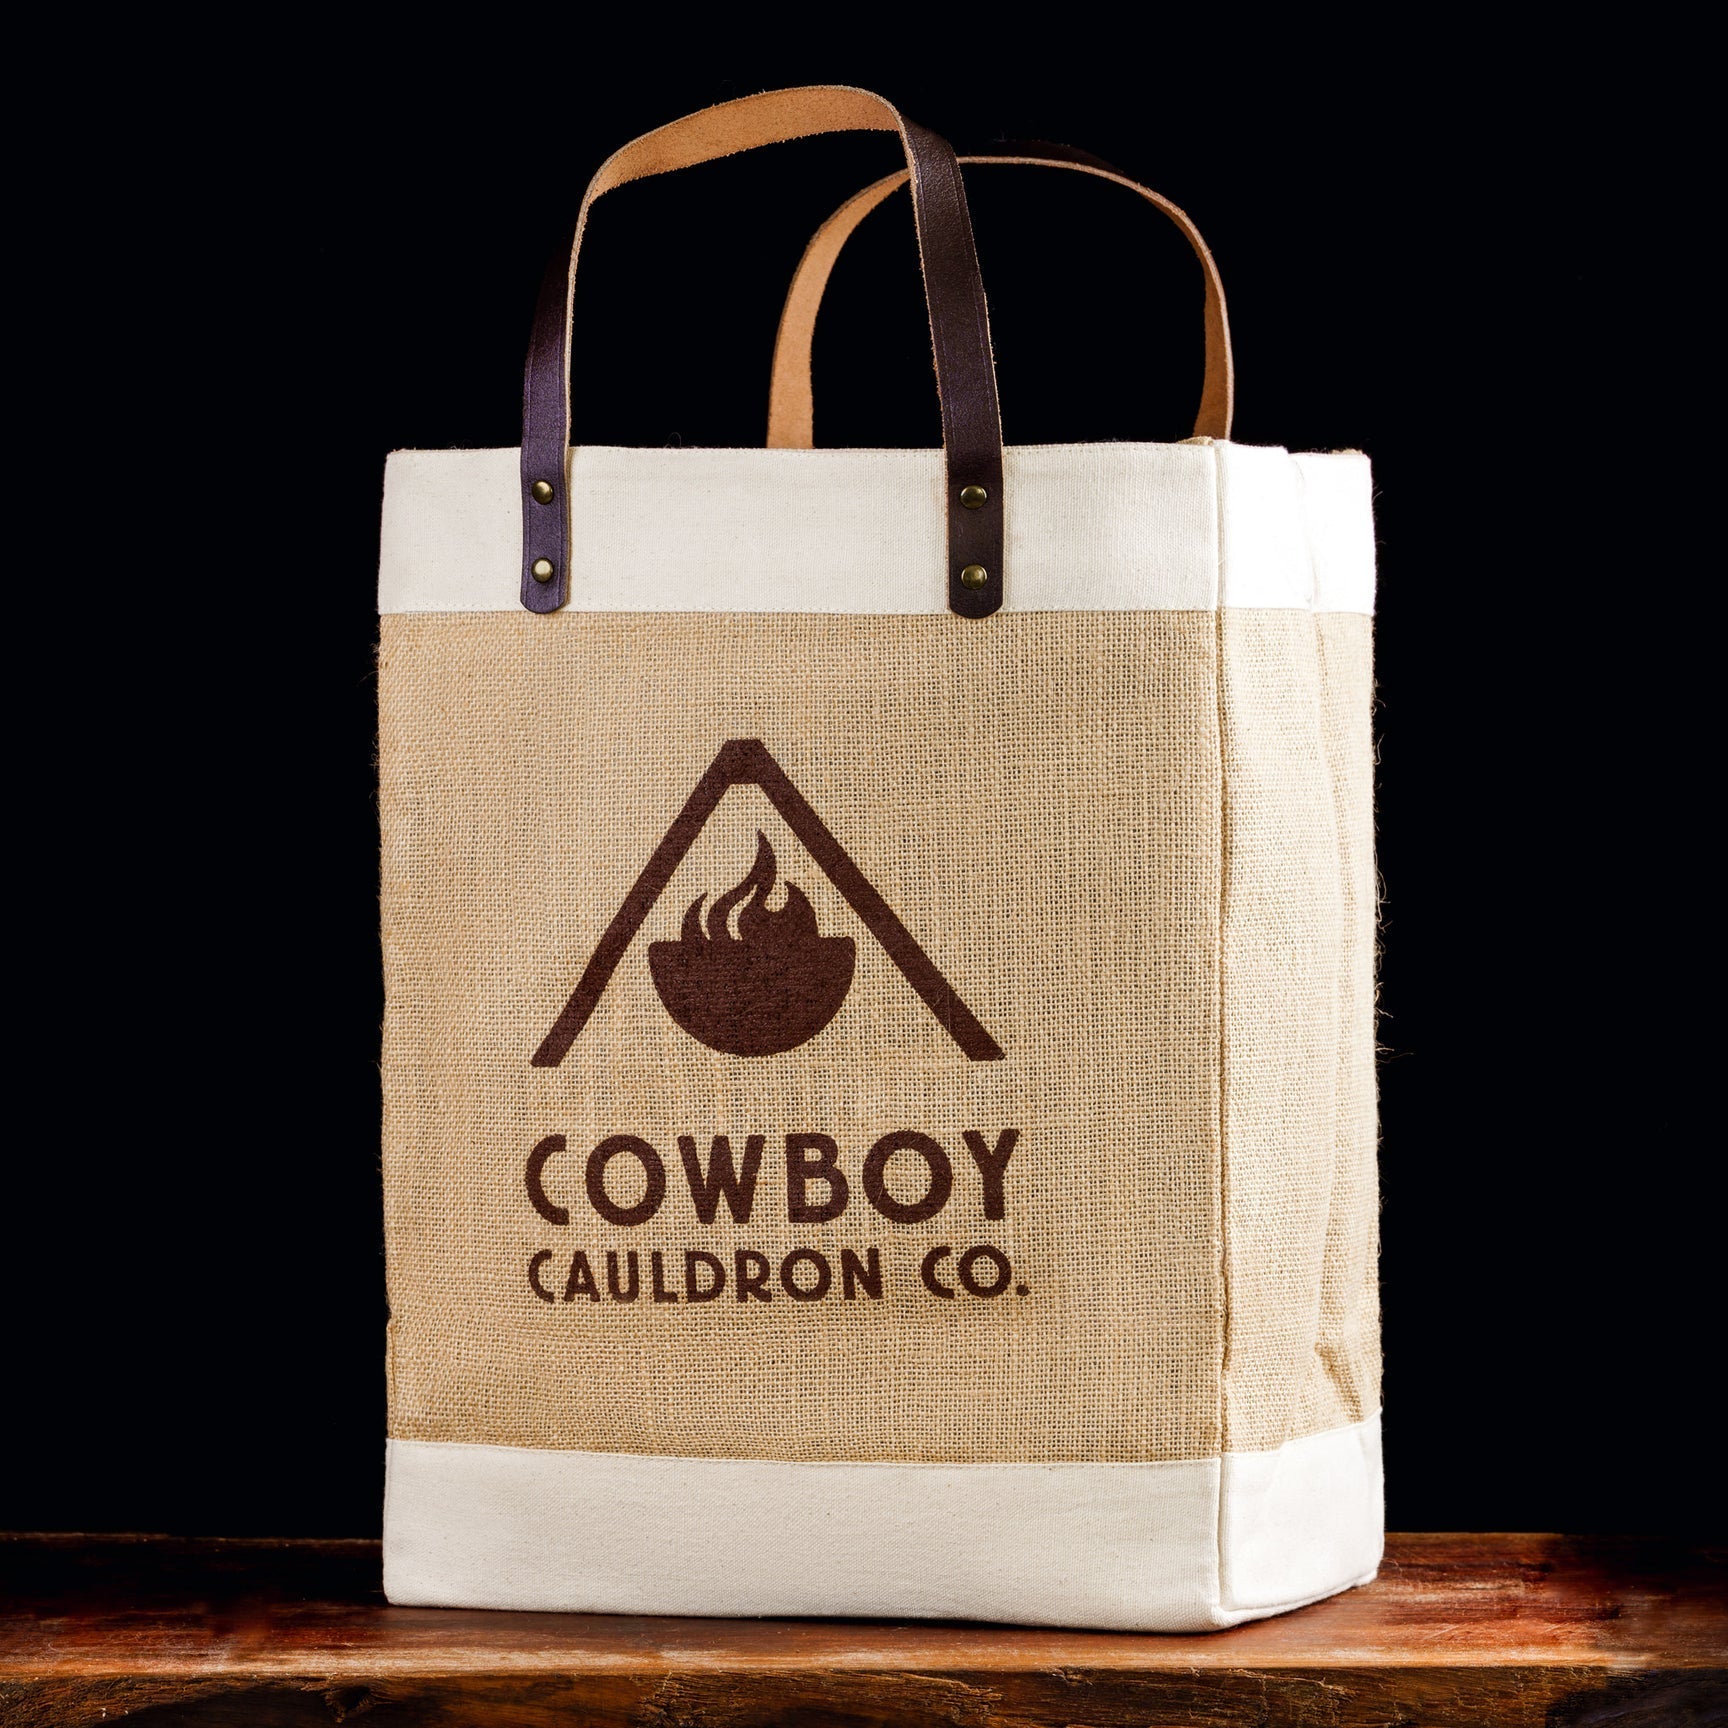 Cowboy Cauldron Co. Tote Bag